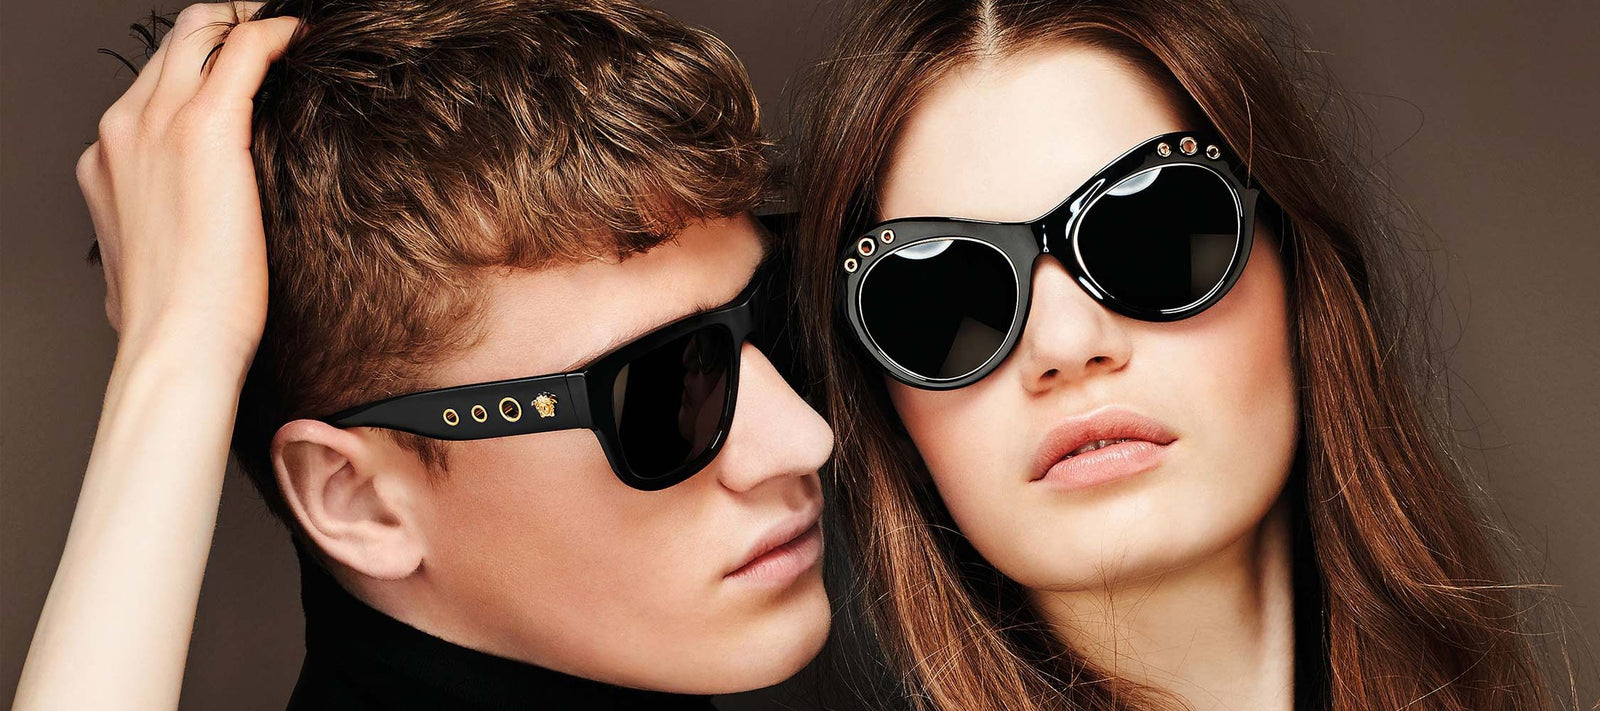 nyIwear Sunglasses Eyeglasses Free Shipping and Returns